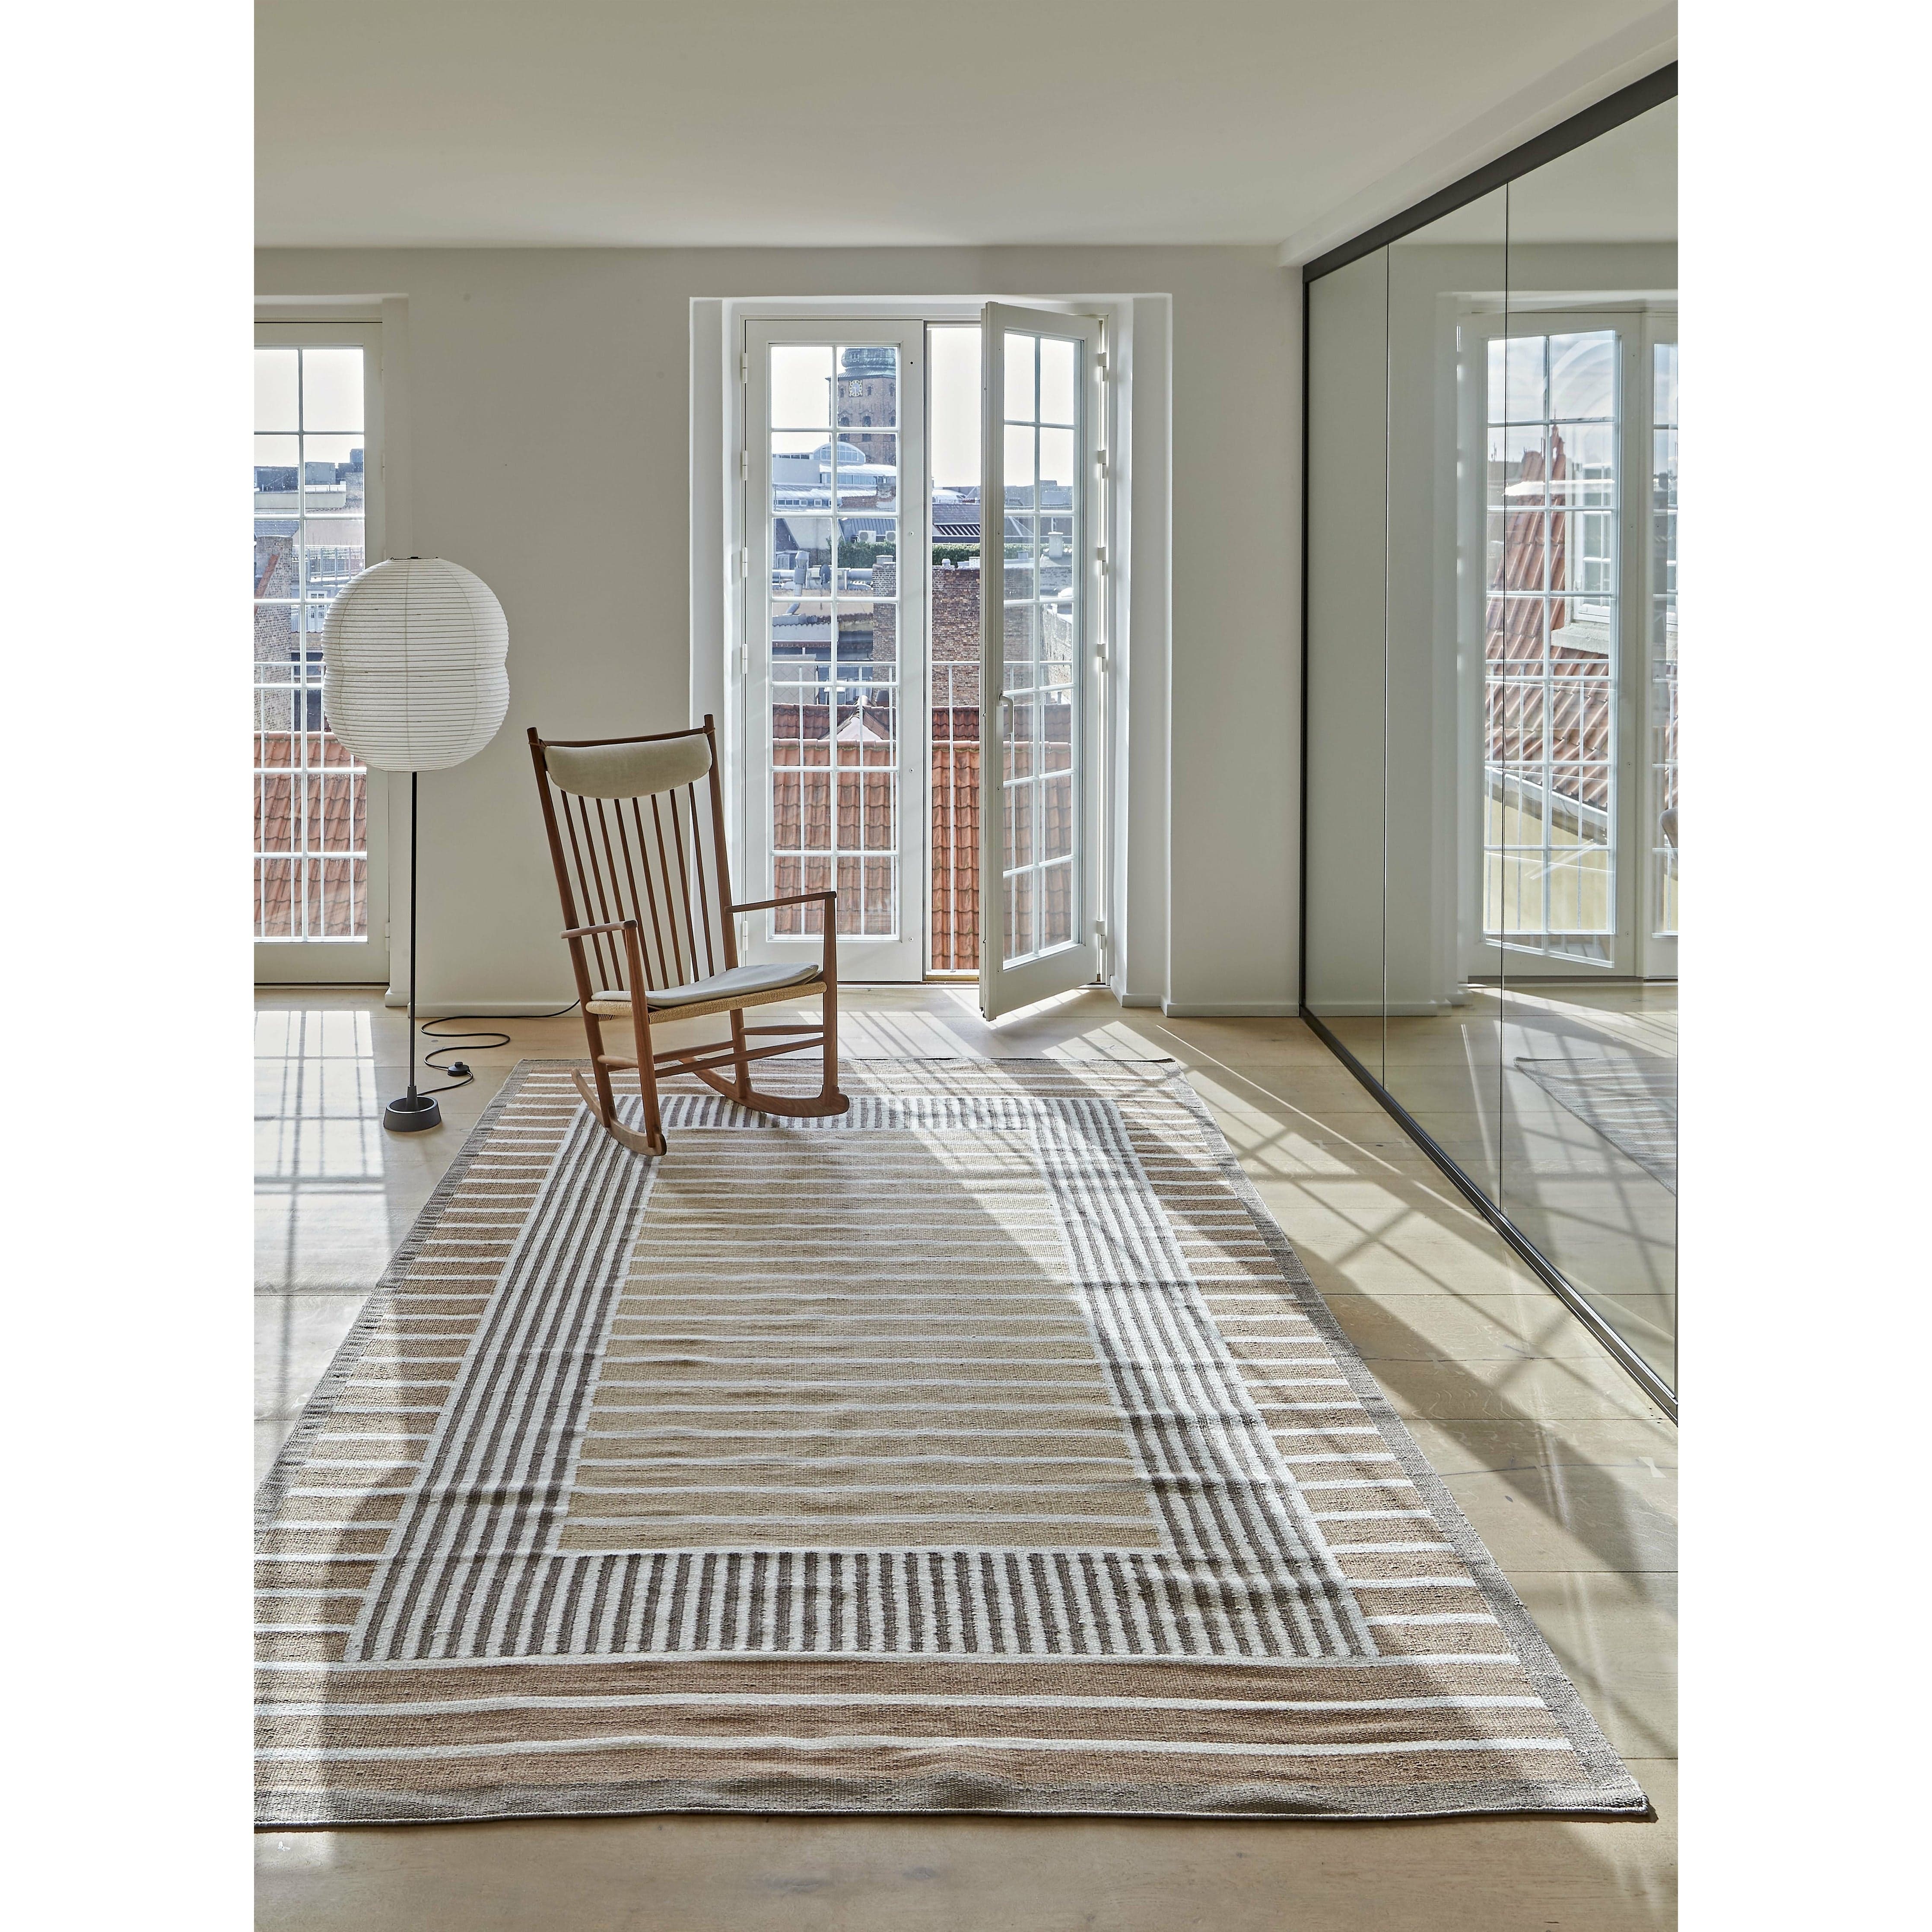 Massimo Hamp Collection av Tanja Kirst Carpet 200x300, Nougat/Rose